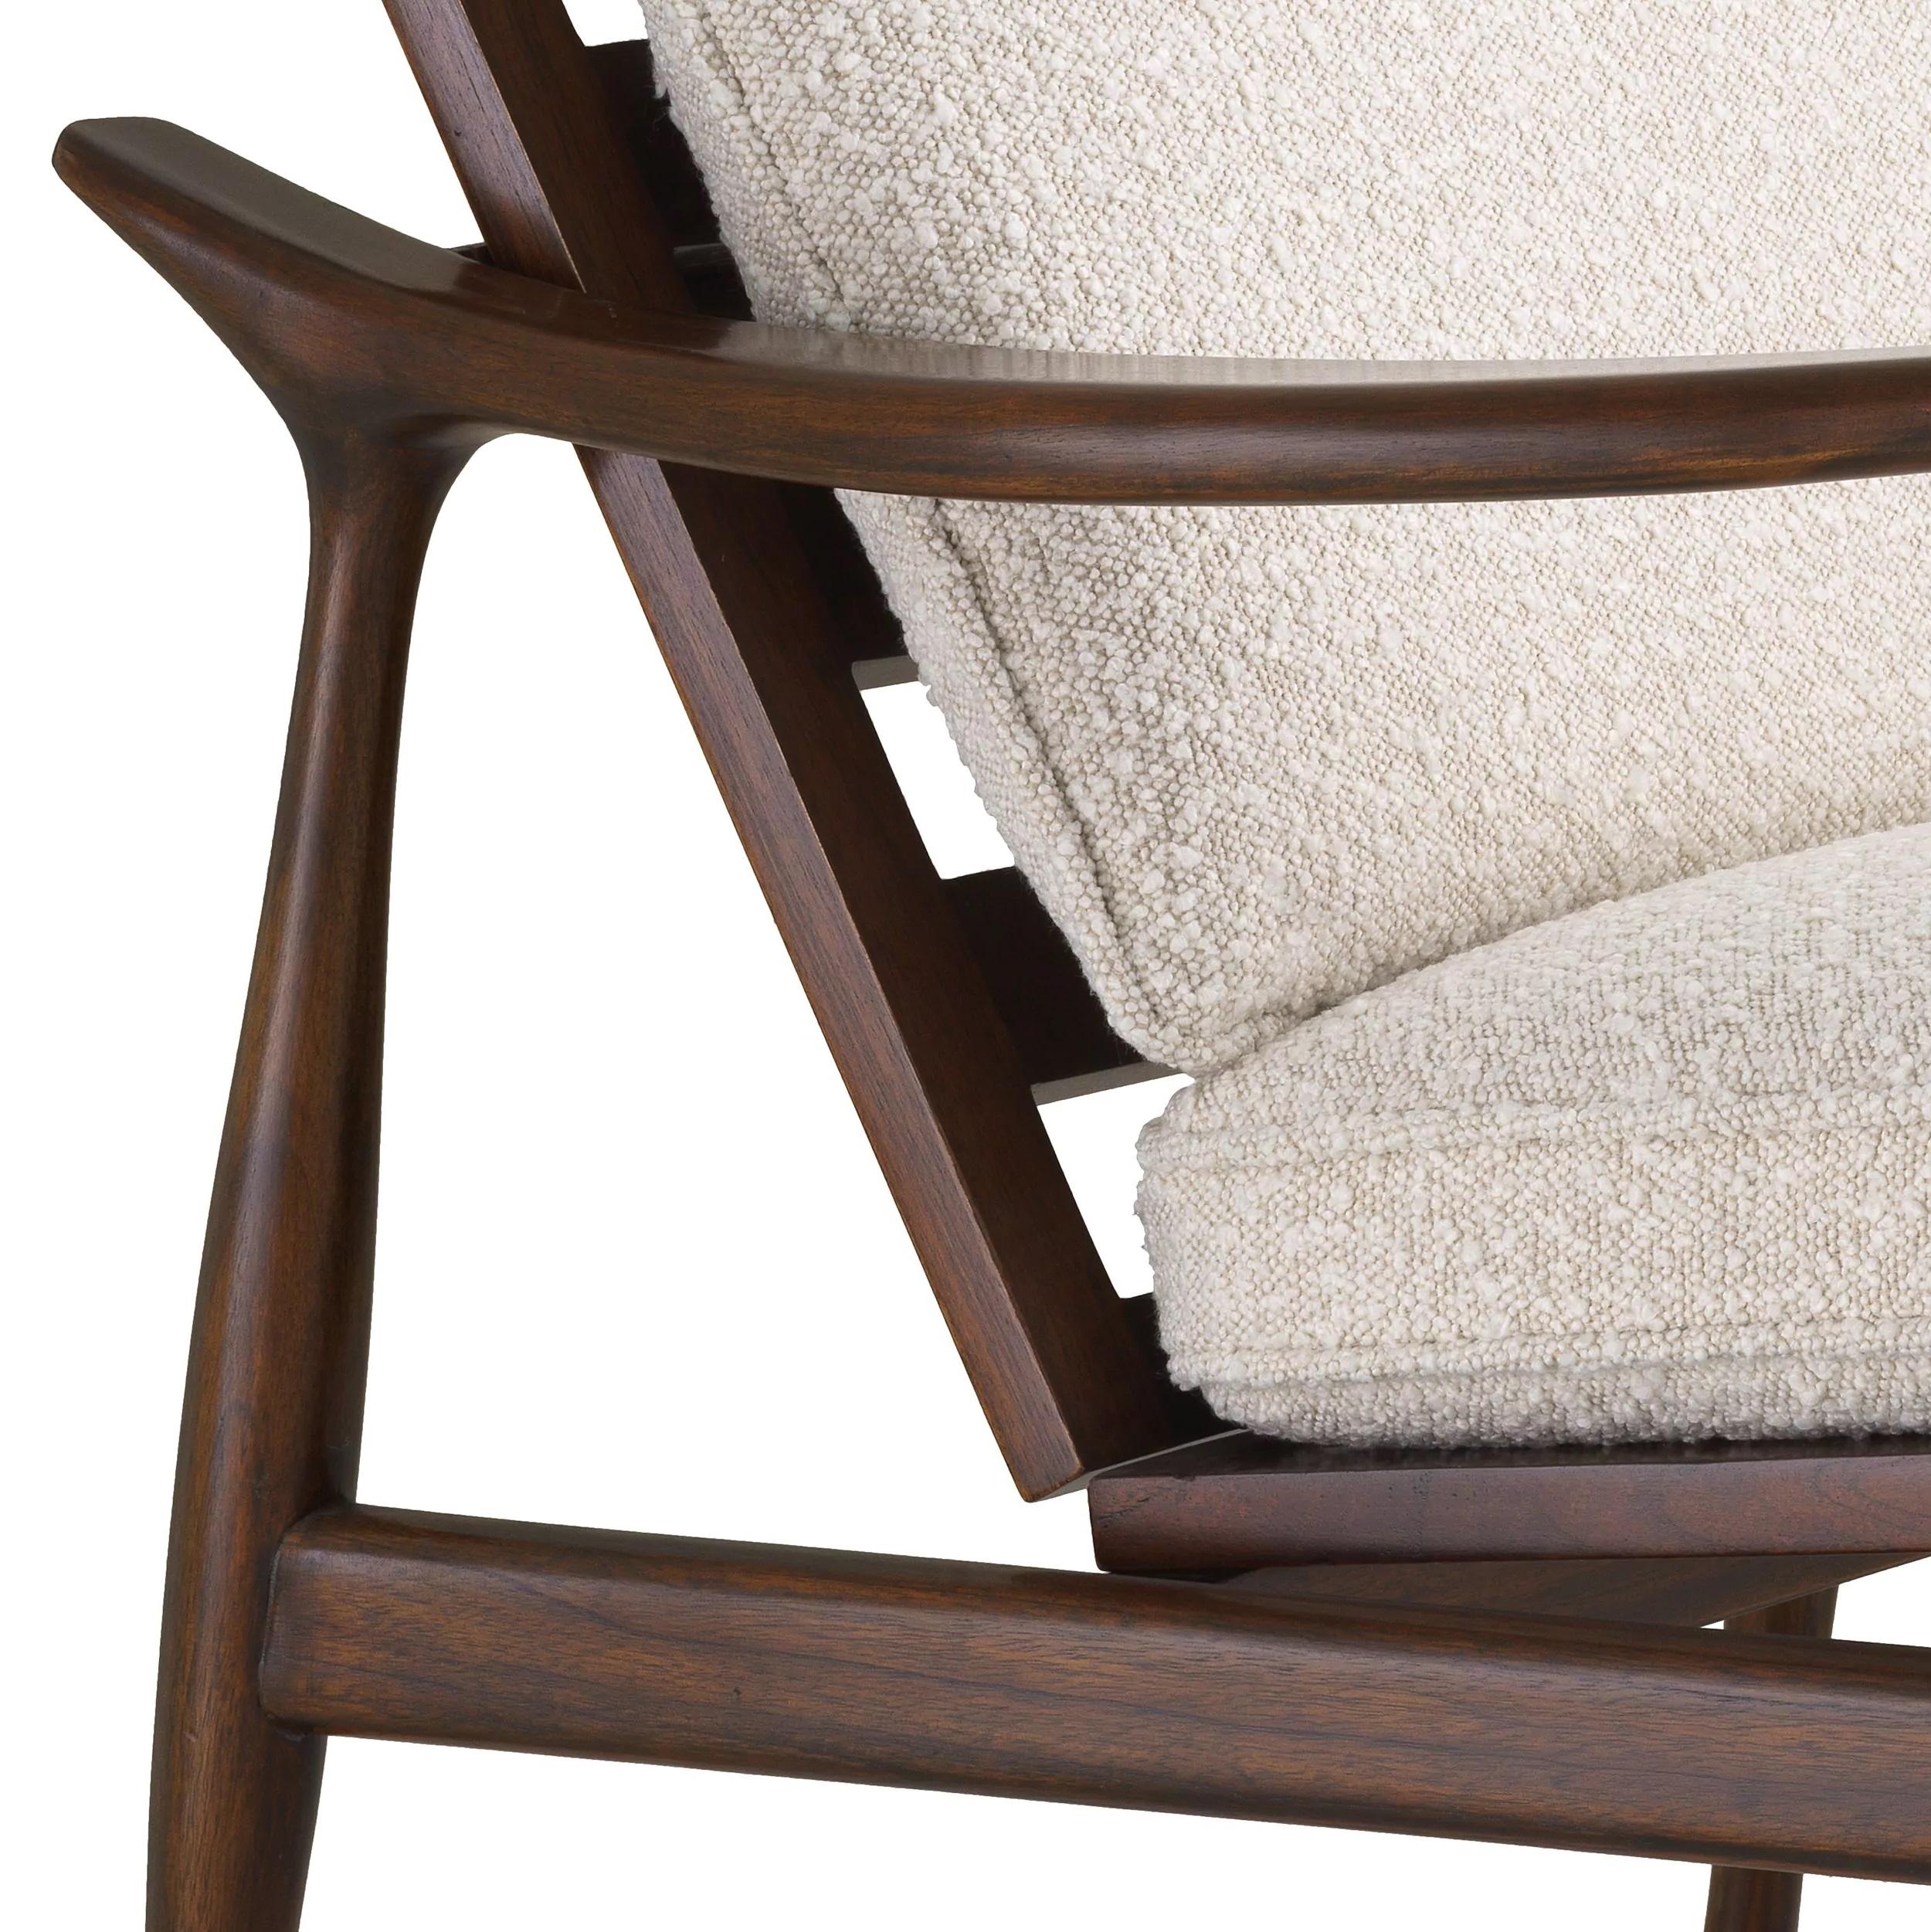 1950s Danish design and Scandinavian style wooden and beige Bouclé Fabric armchair.